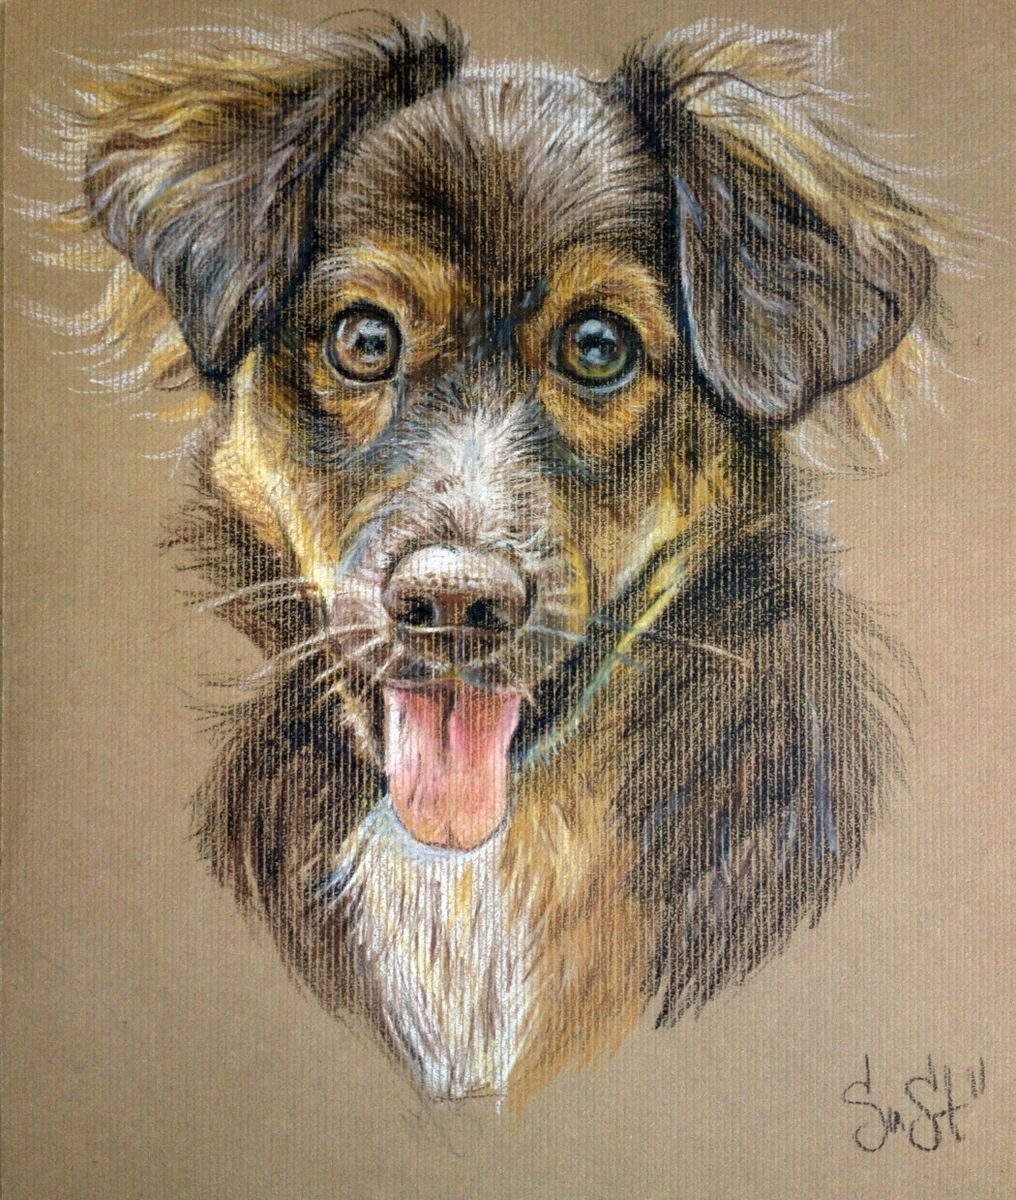 A dog smile Pencil drawing by Suzana Stanoeva | Artfinder